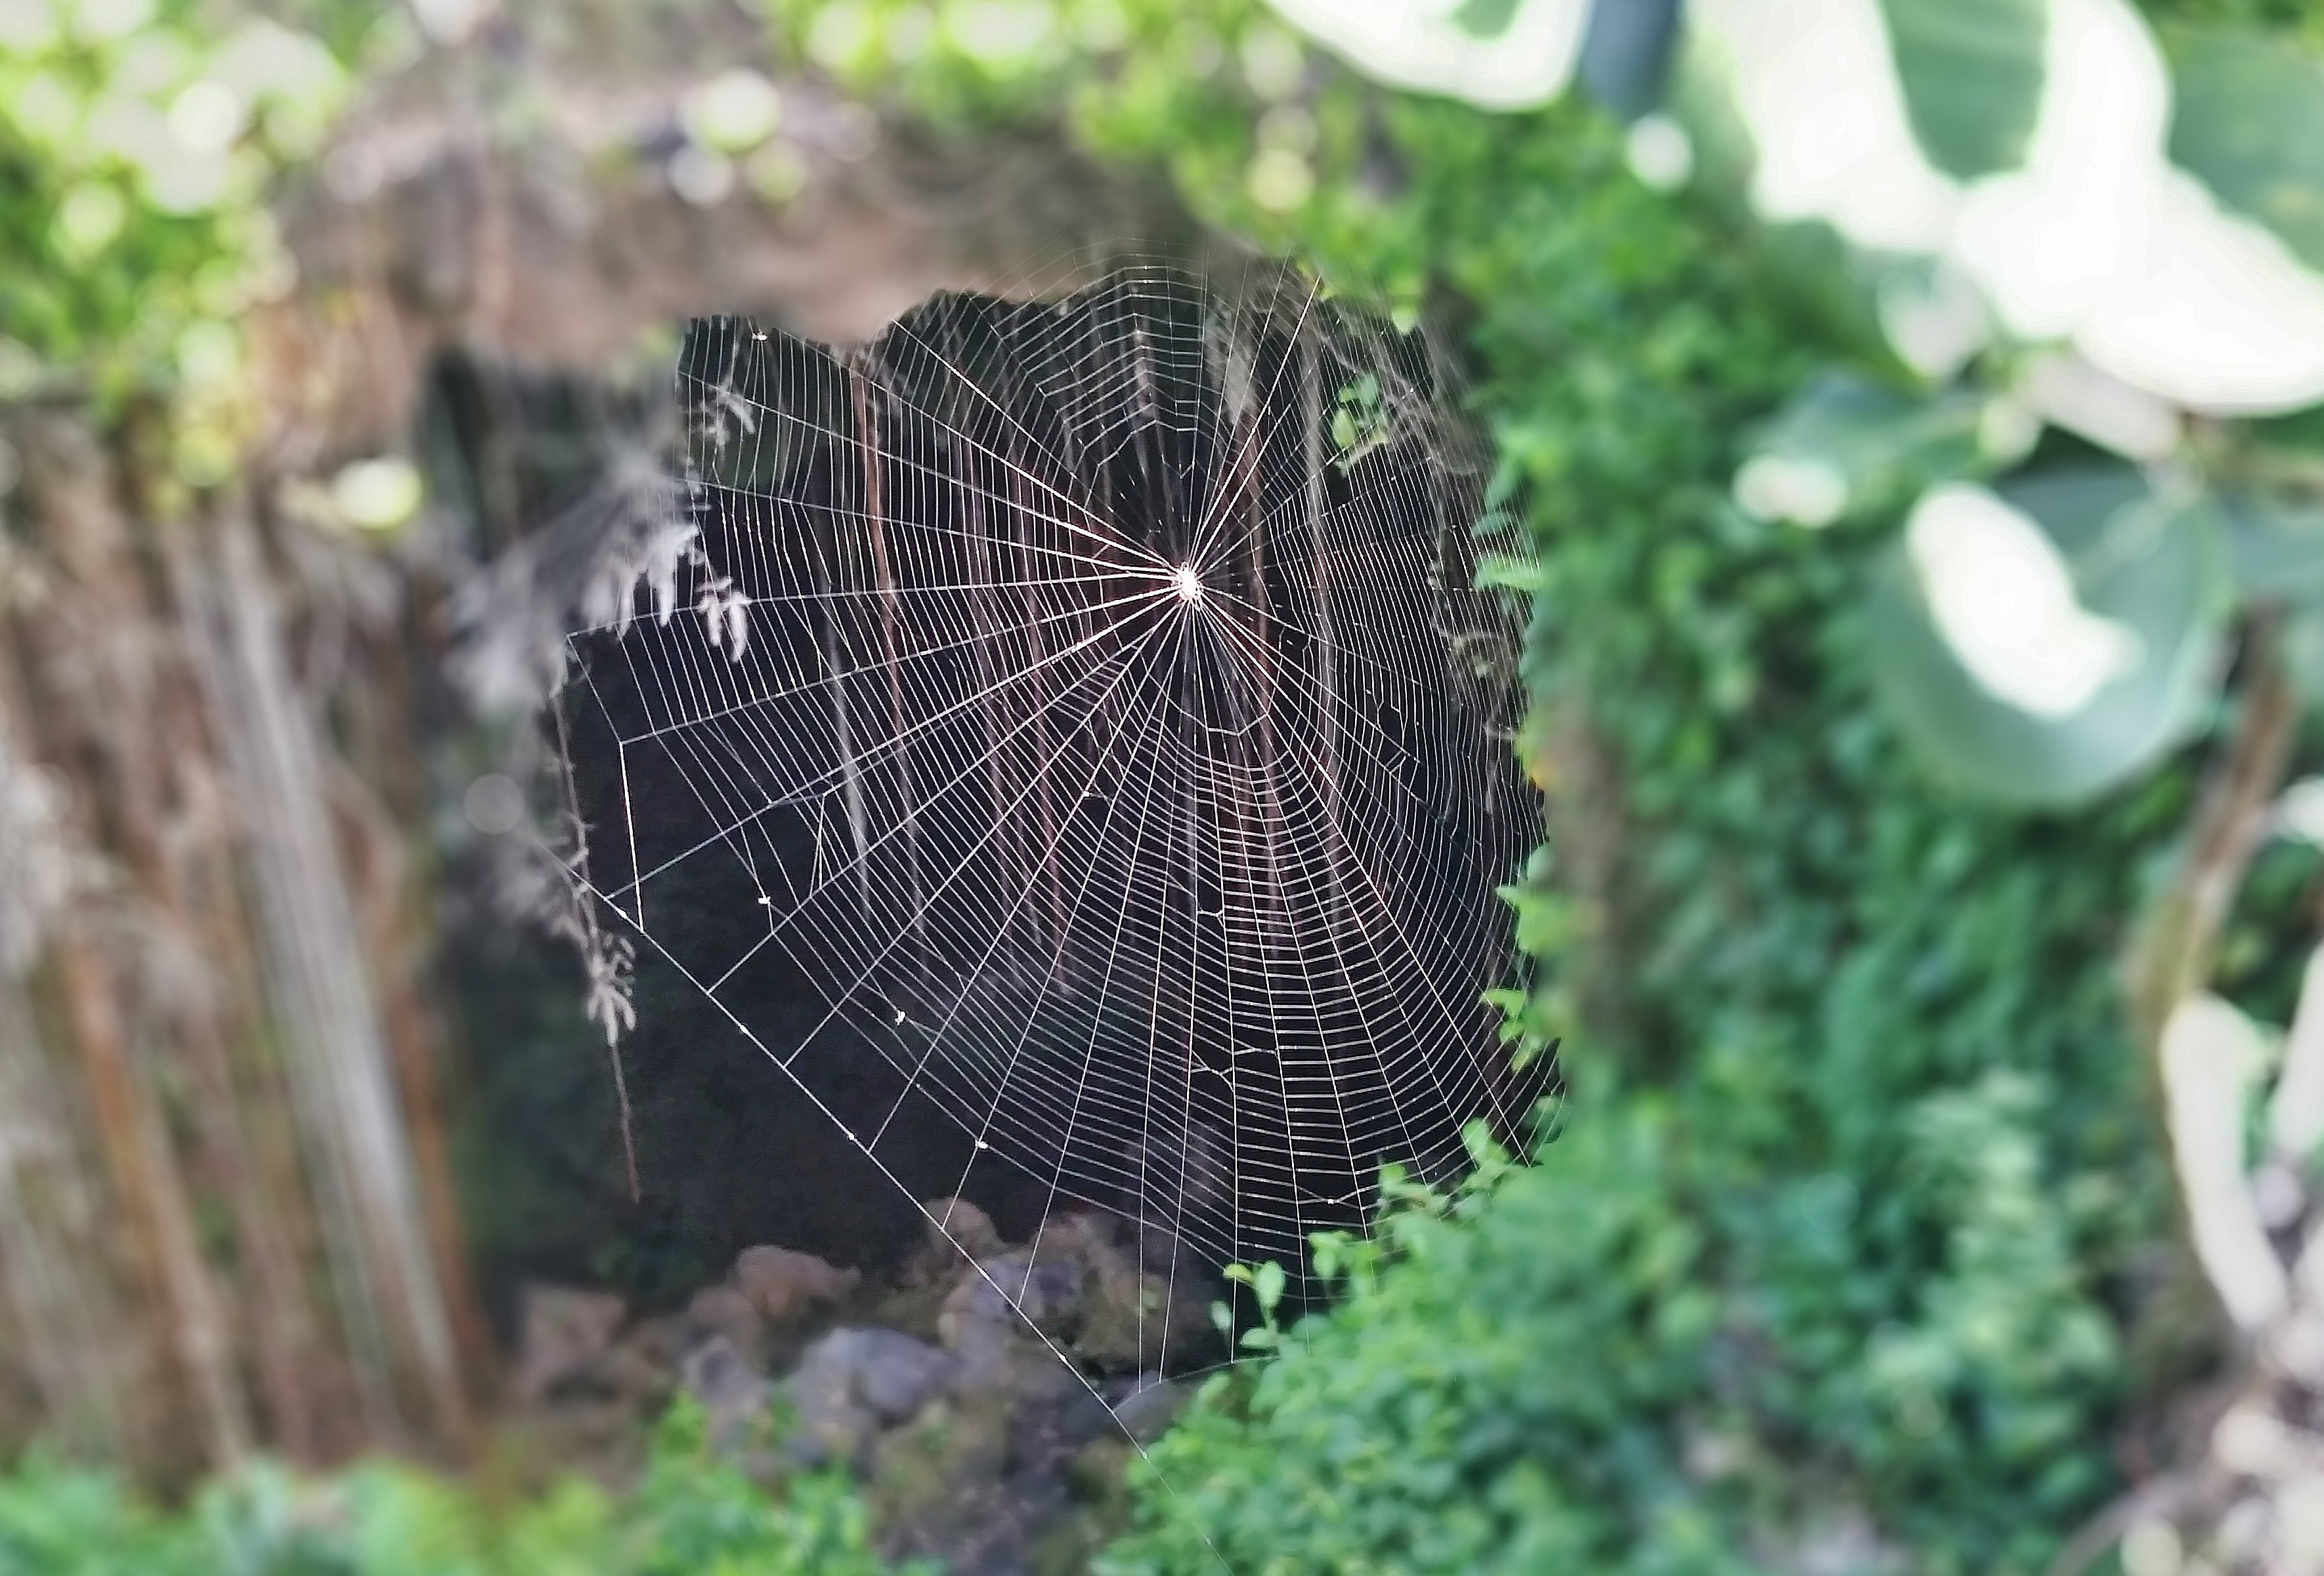 Kaumana Caves spider web